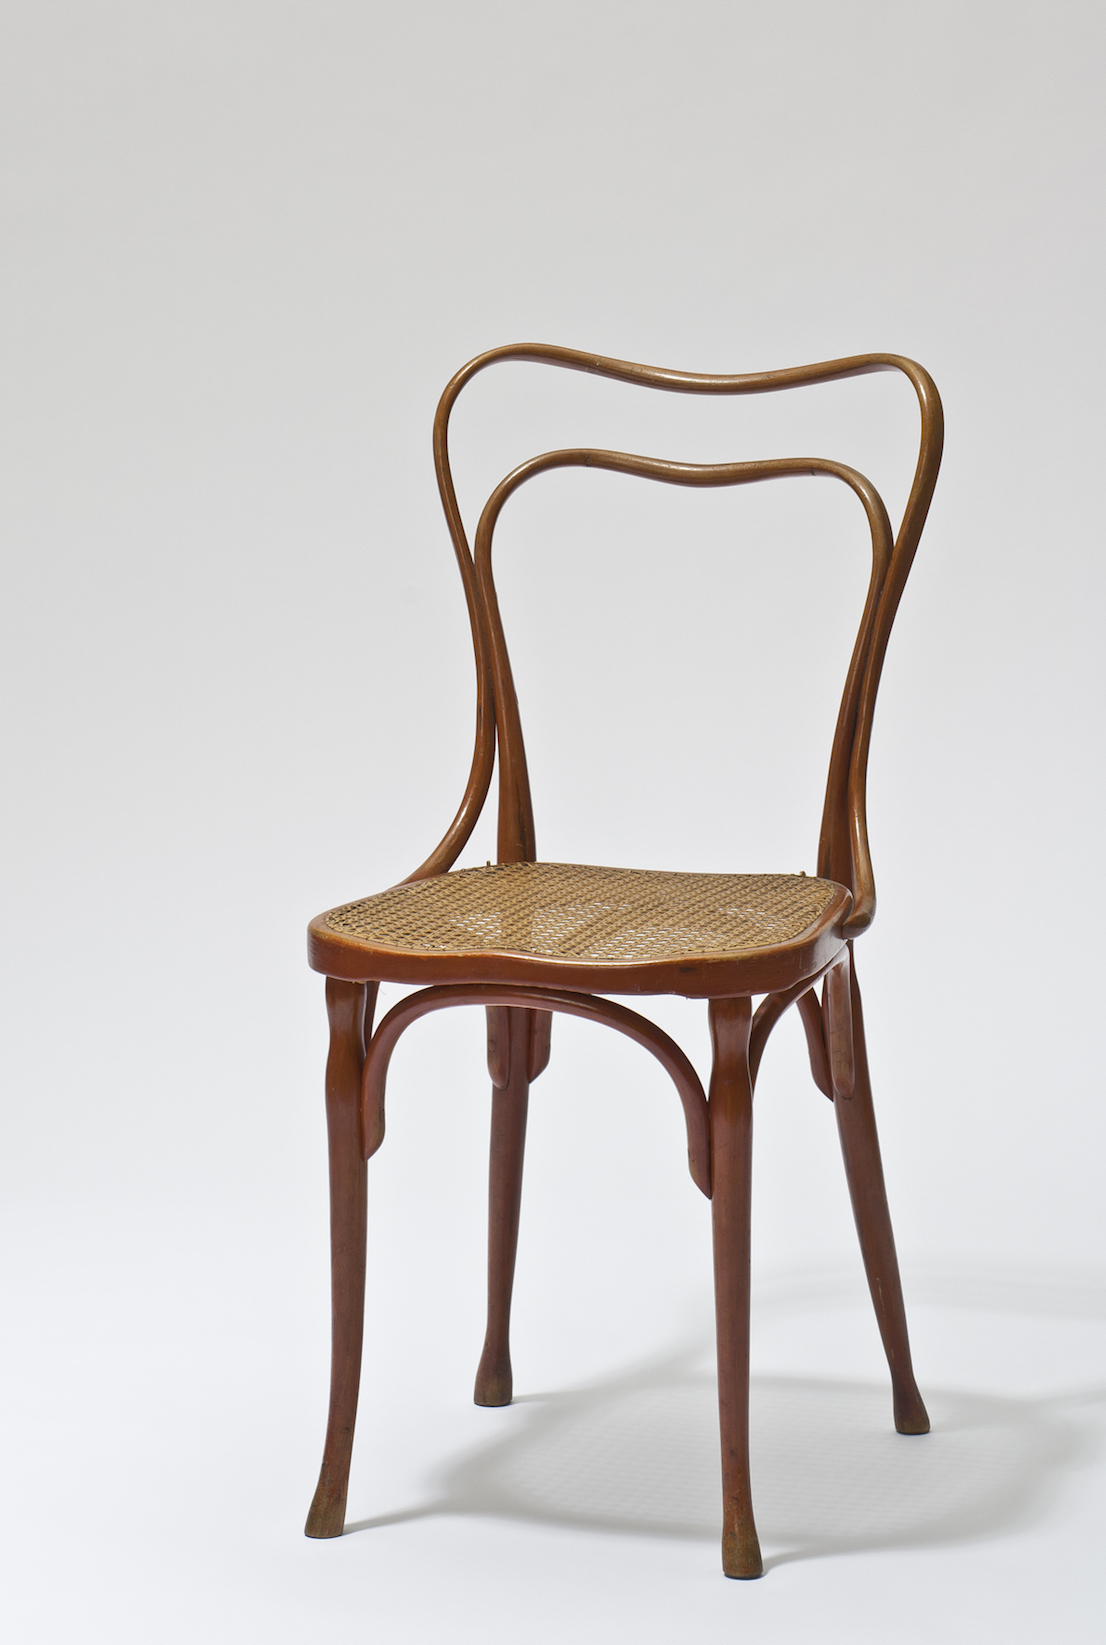 Adolf Loos chair for Café Museum, Vienna, 1899 © MAK/Georg Mayer